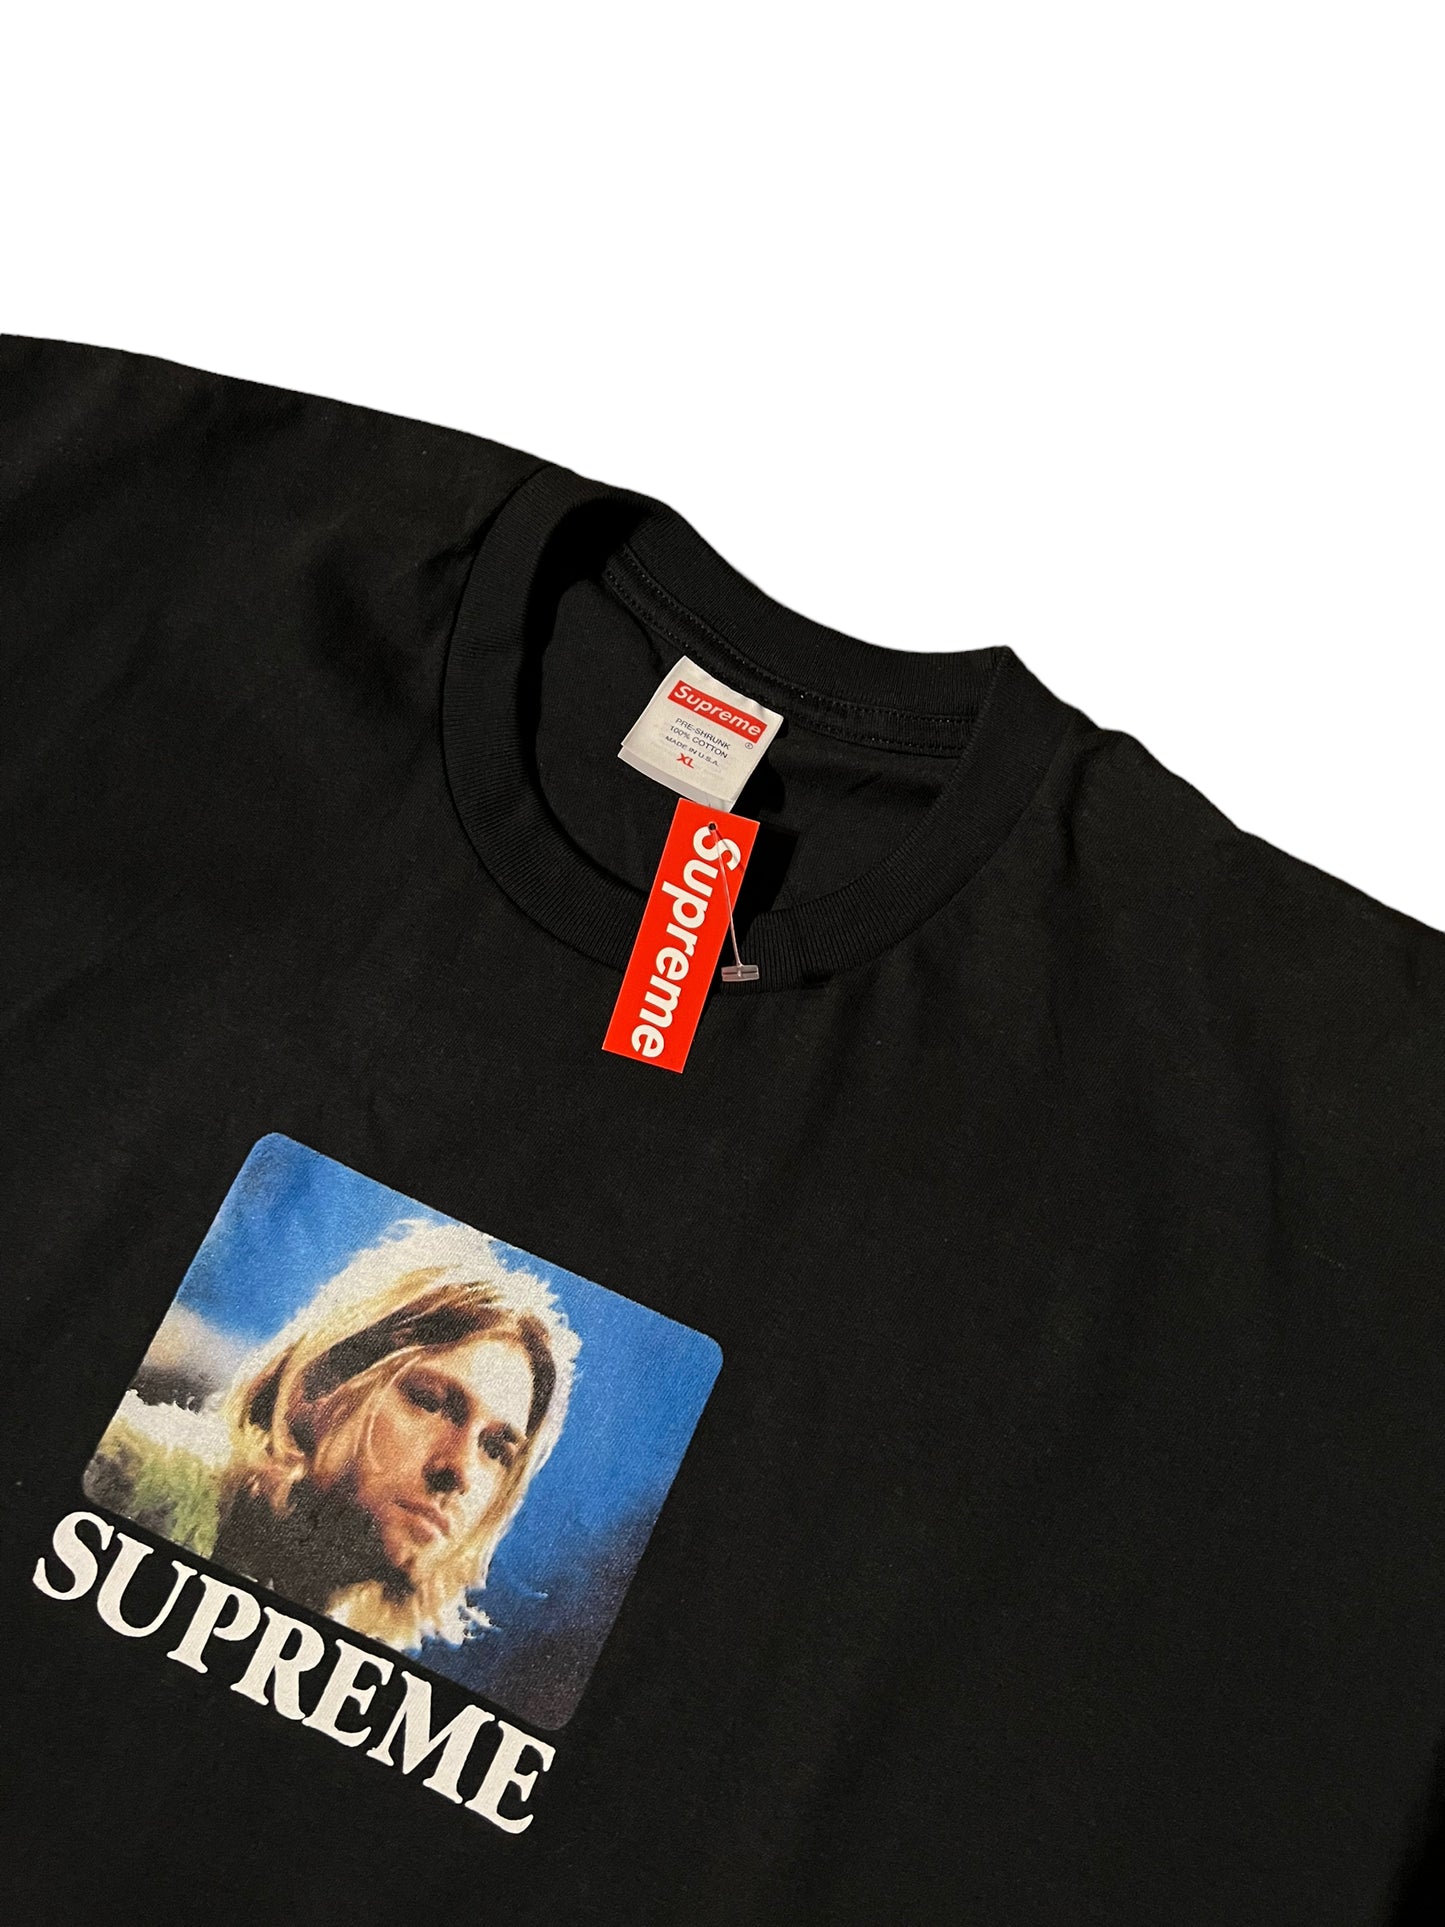 Supreme Kurt Cobain tee